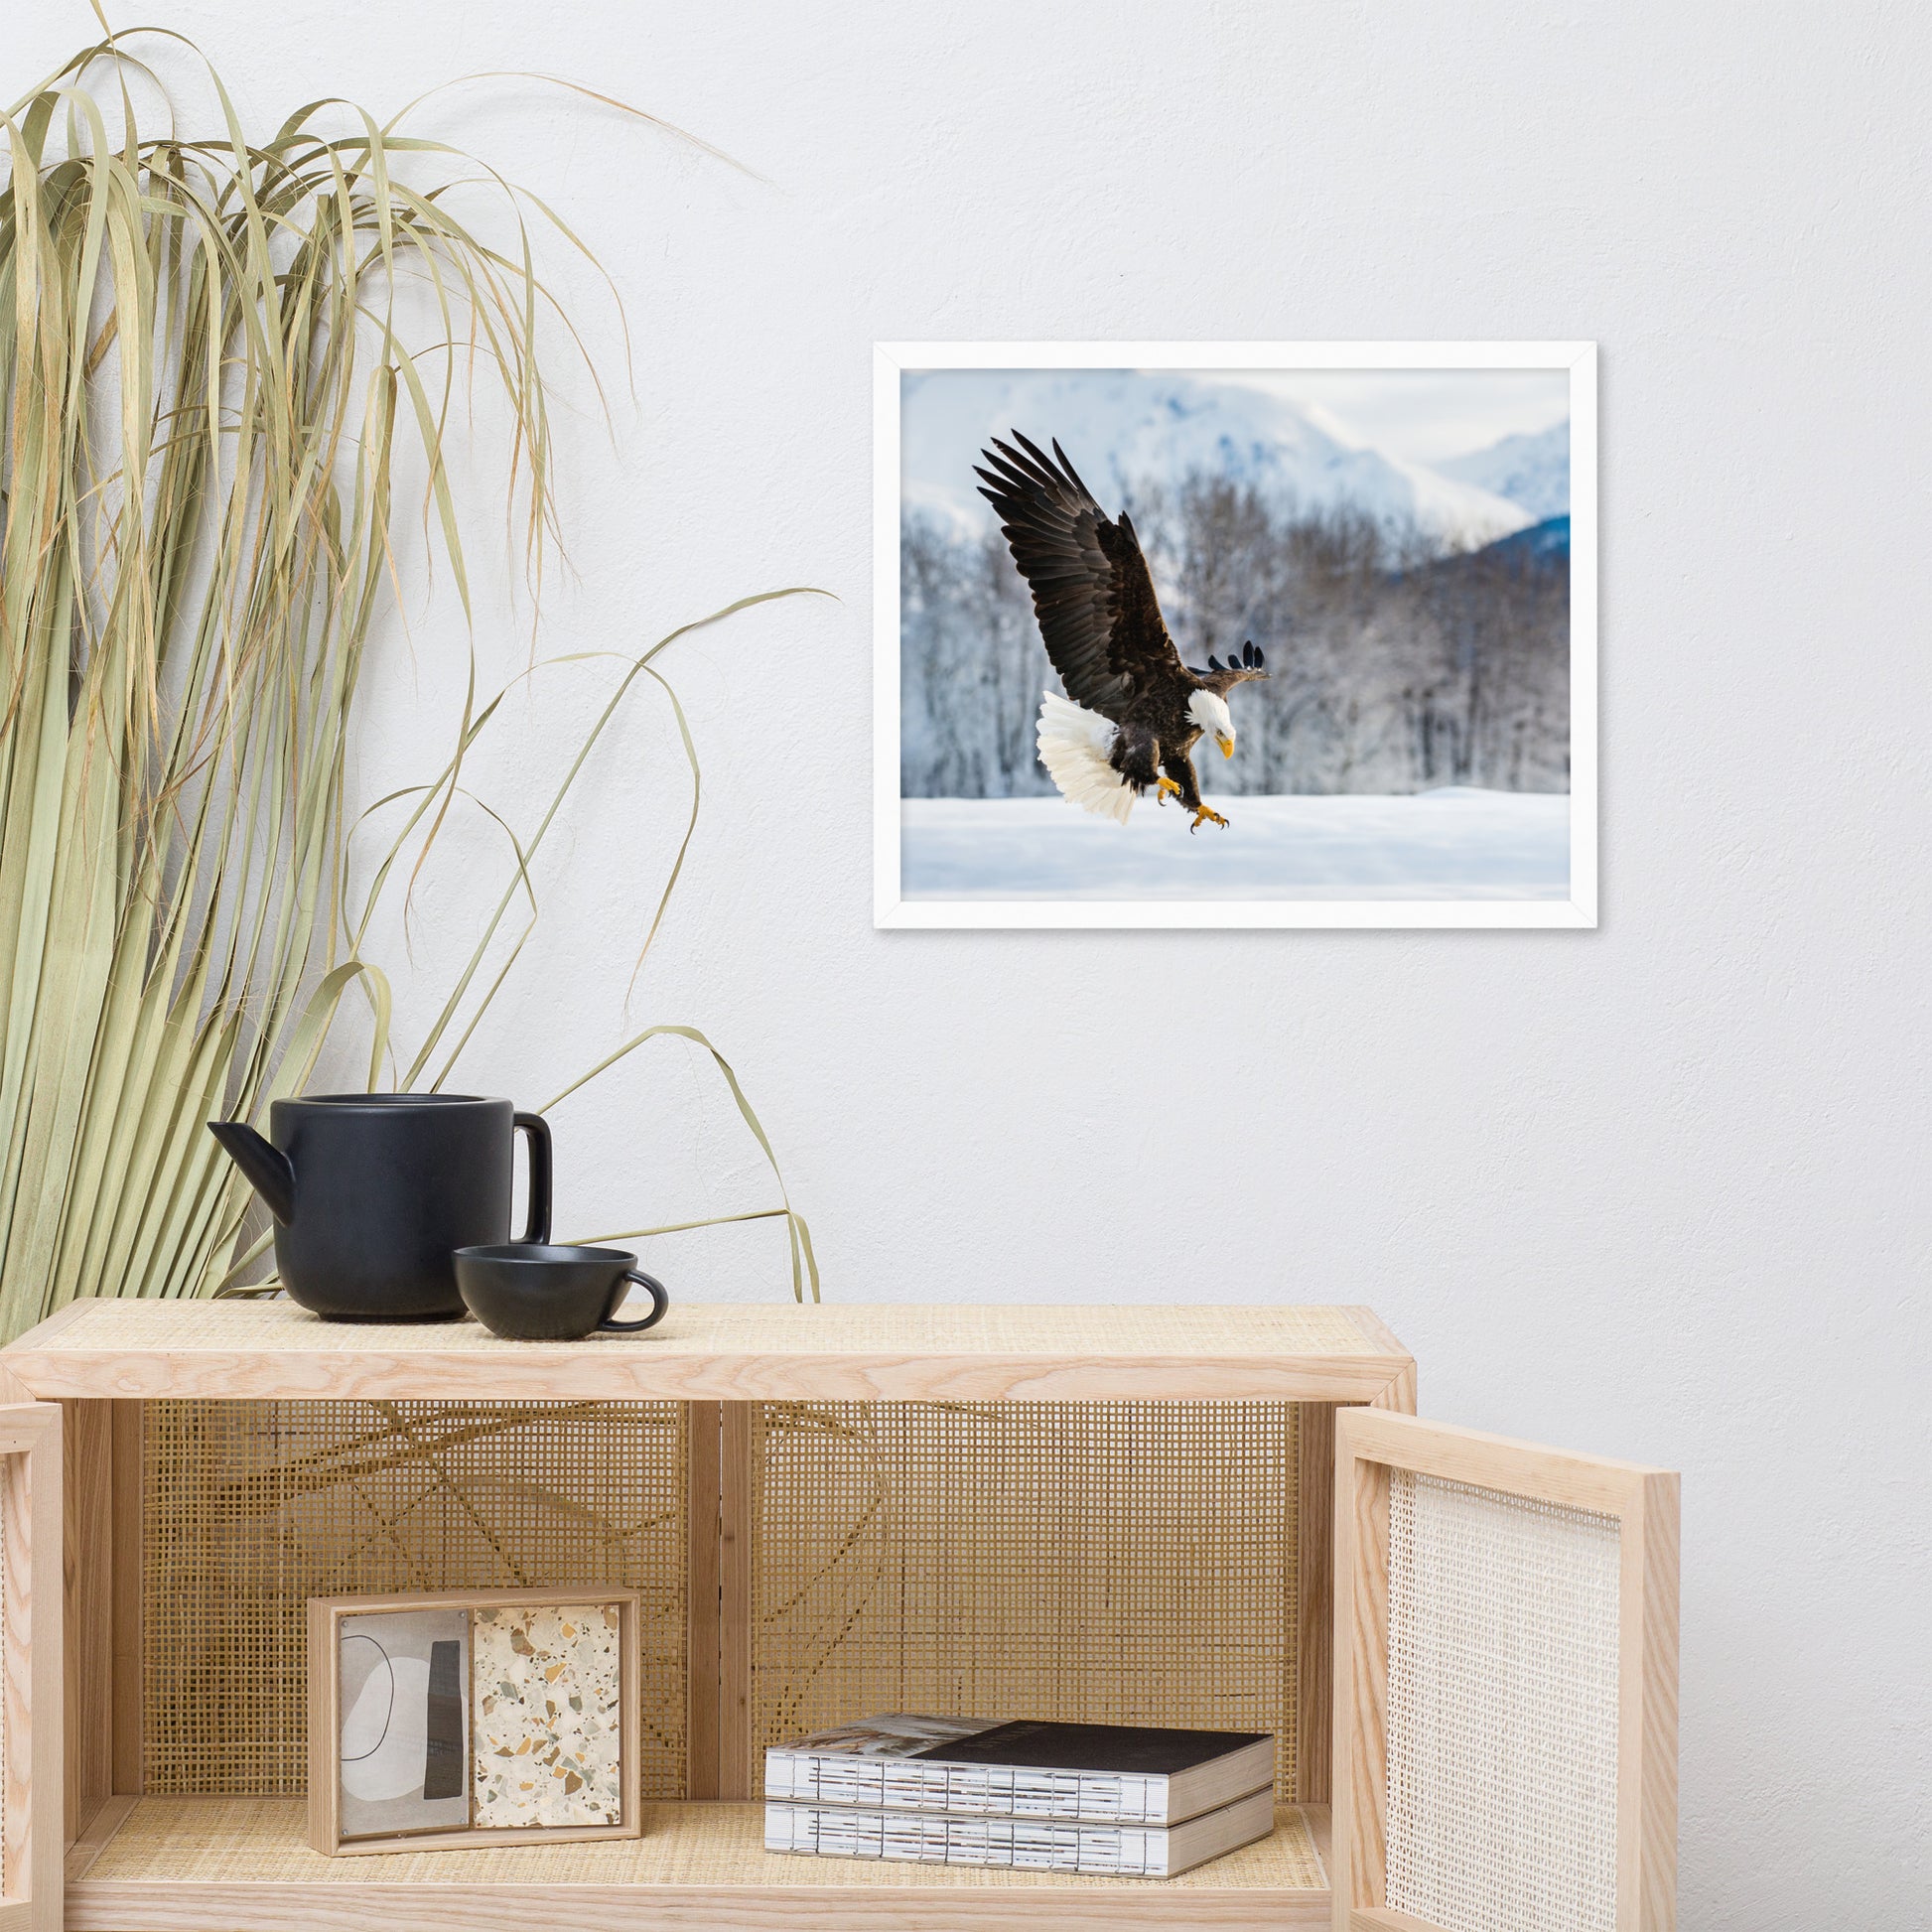 hallway stair wall decor ideas, Adult Bald Eagle and Alaskan Winter Animal Wildlife Photograph Framed Wall Art Print